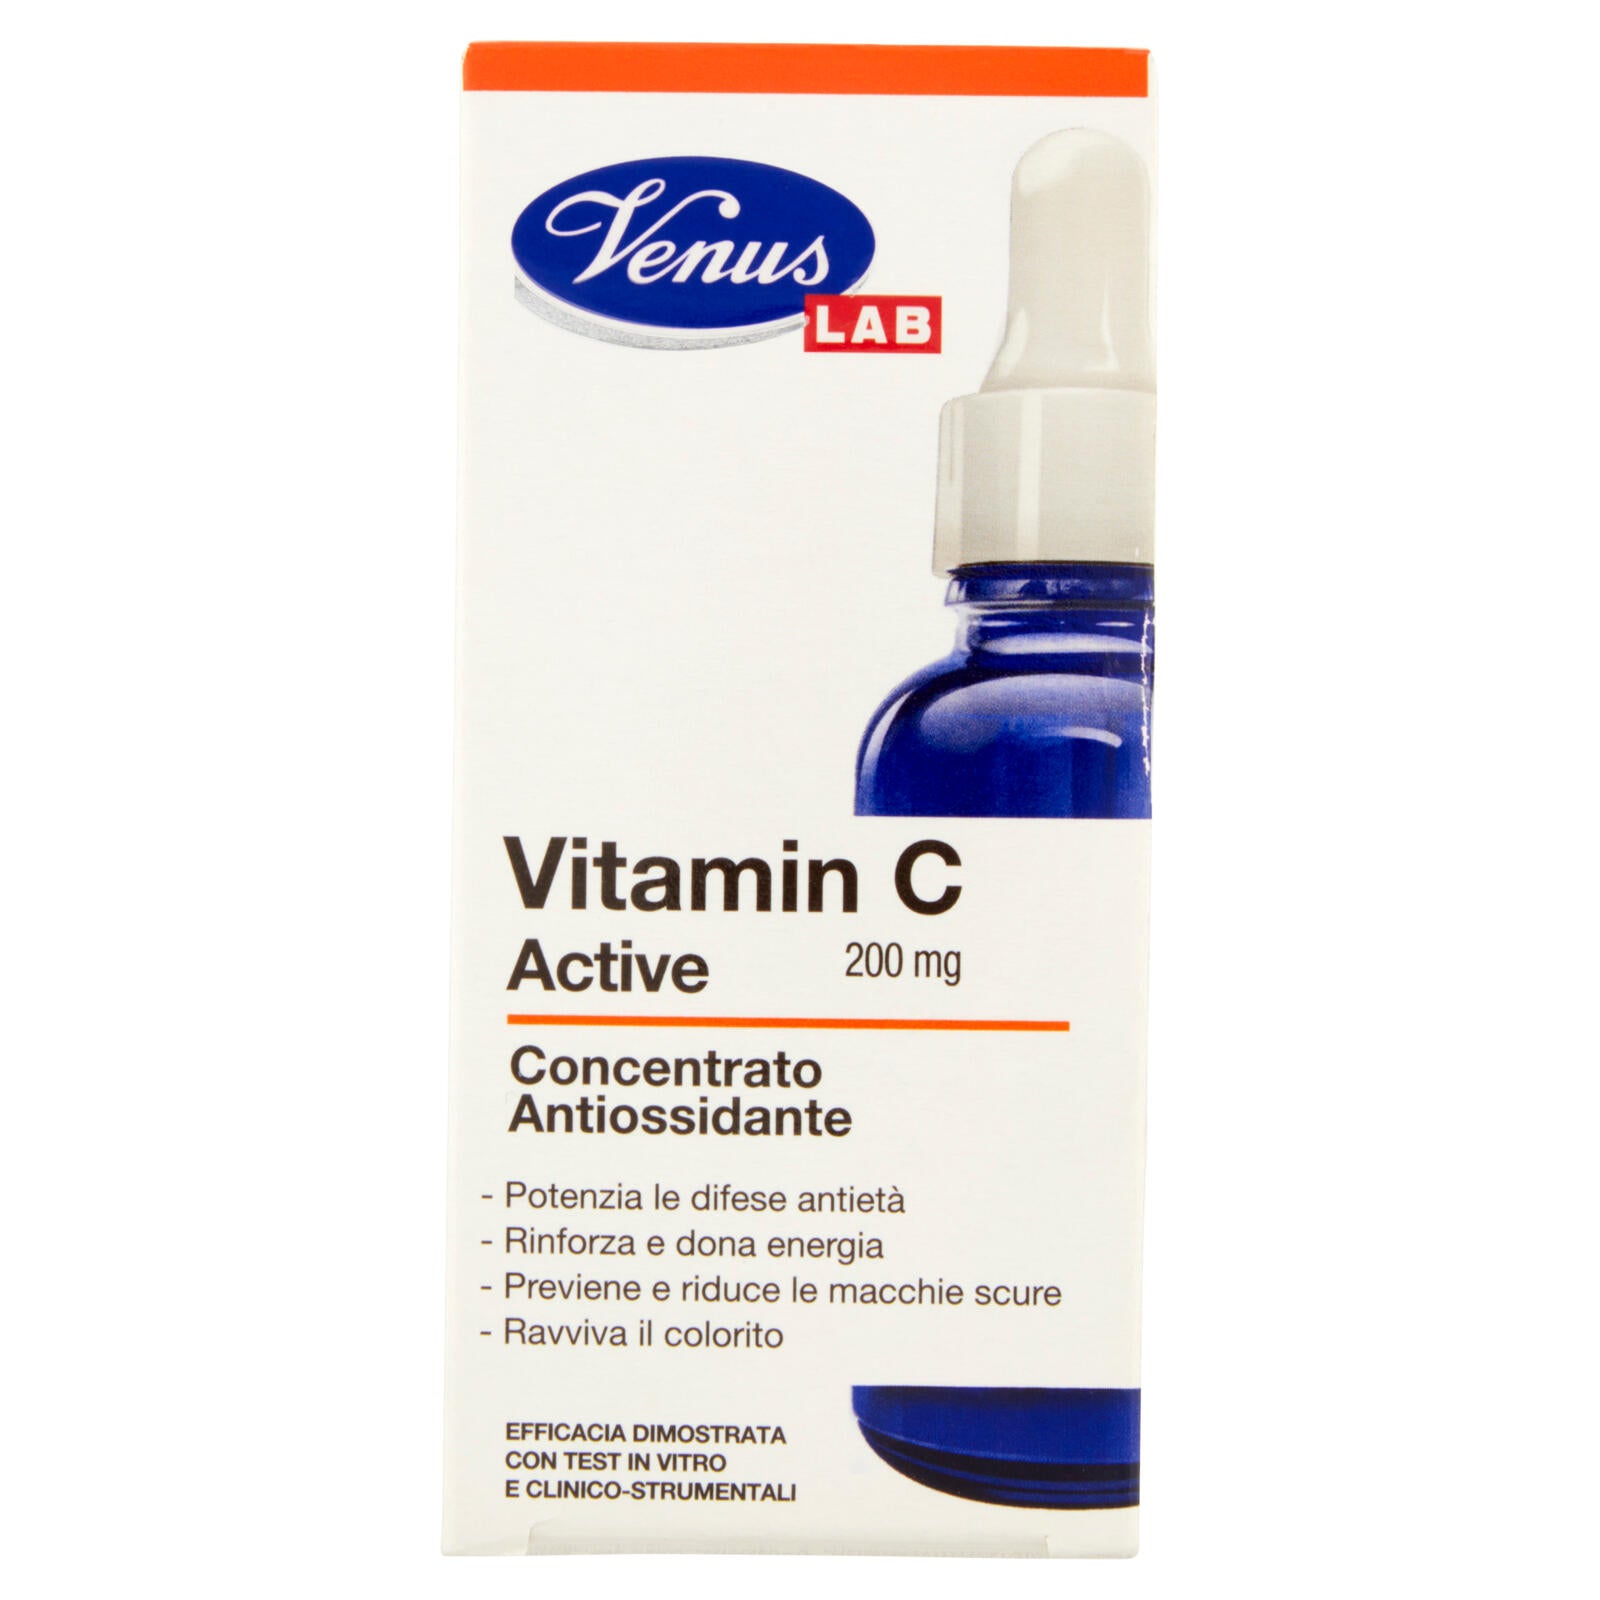 Venus Lab Vitamin C Active Concentrato Antiossidante 30 mL